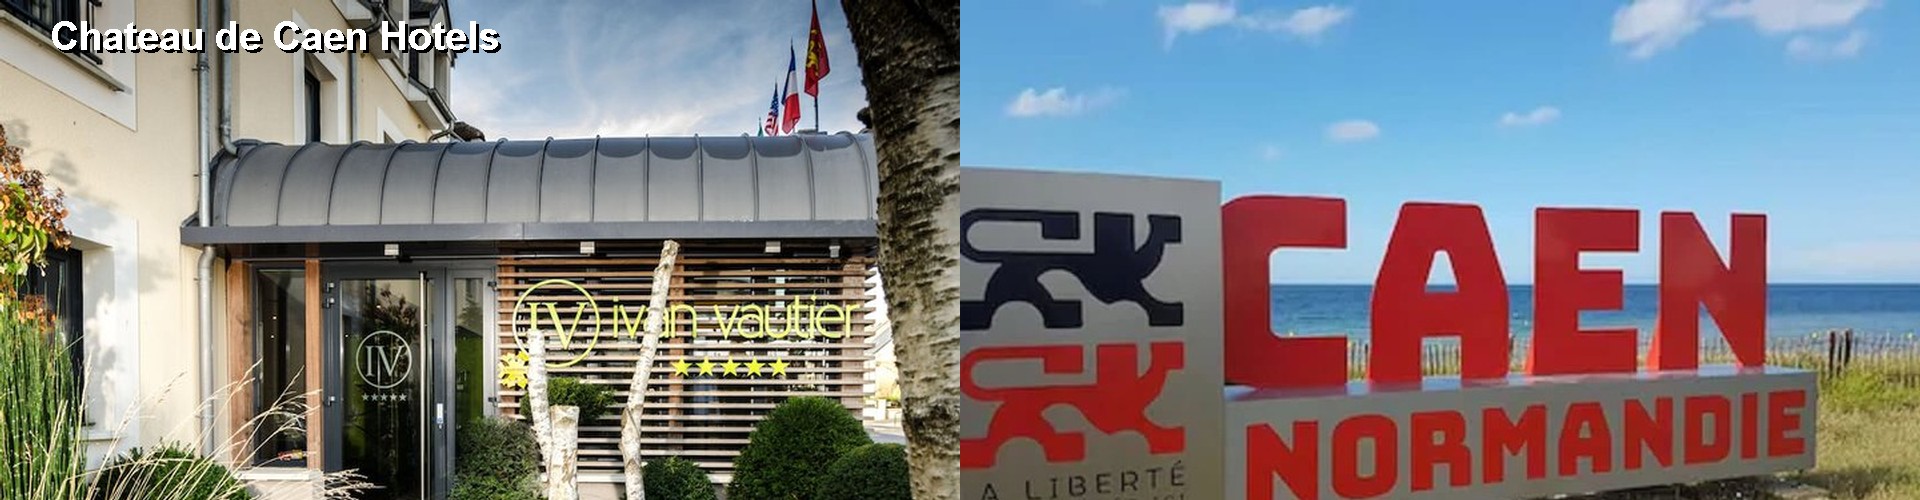 5 Best Hotels near Chateau de Caen